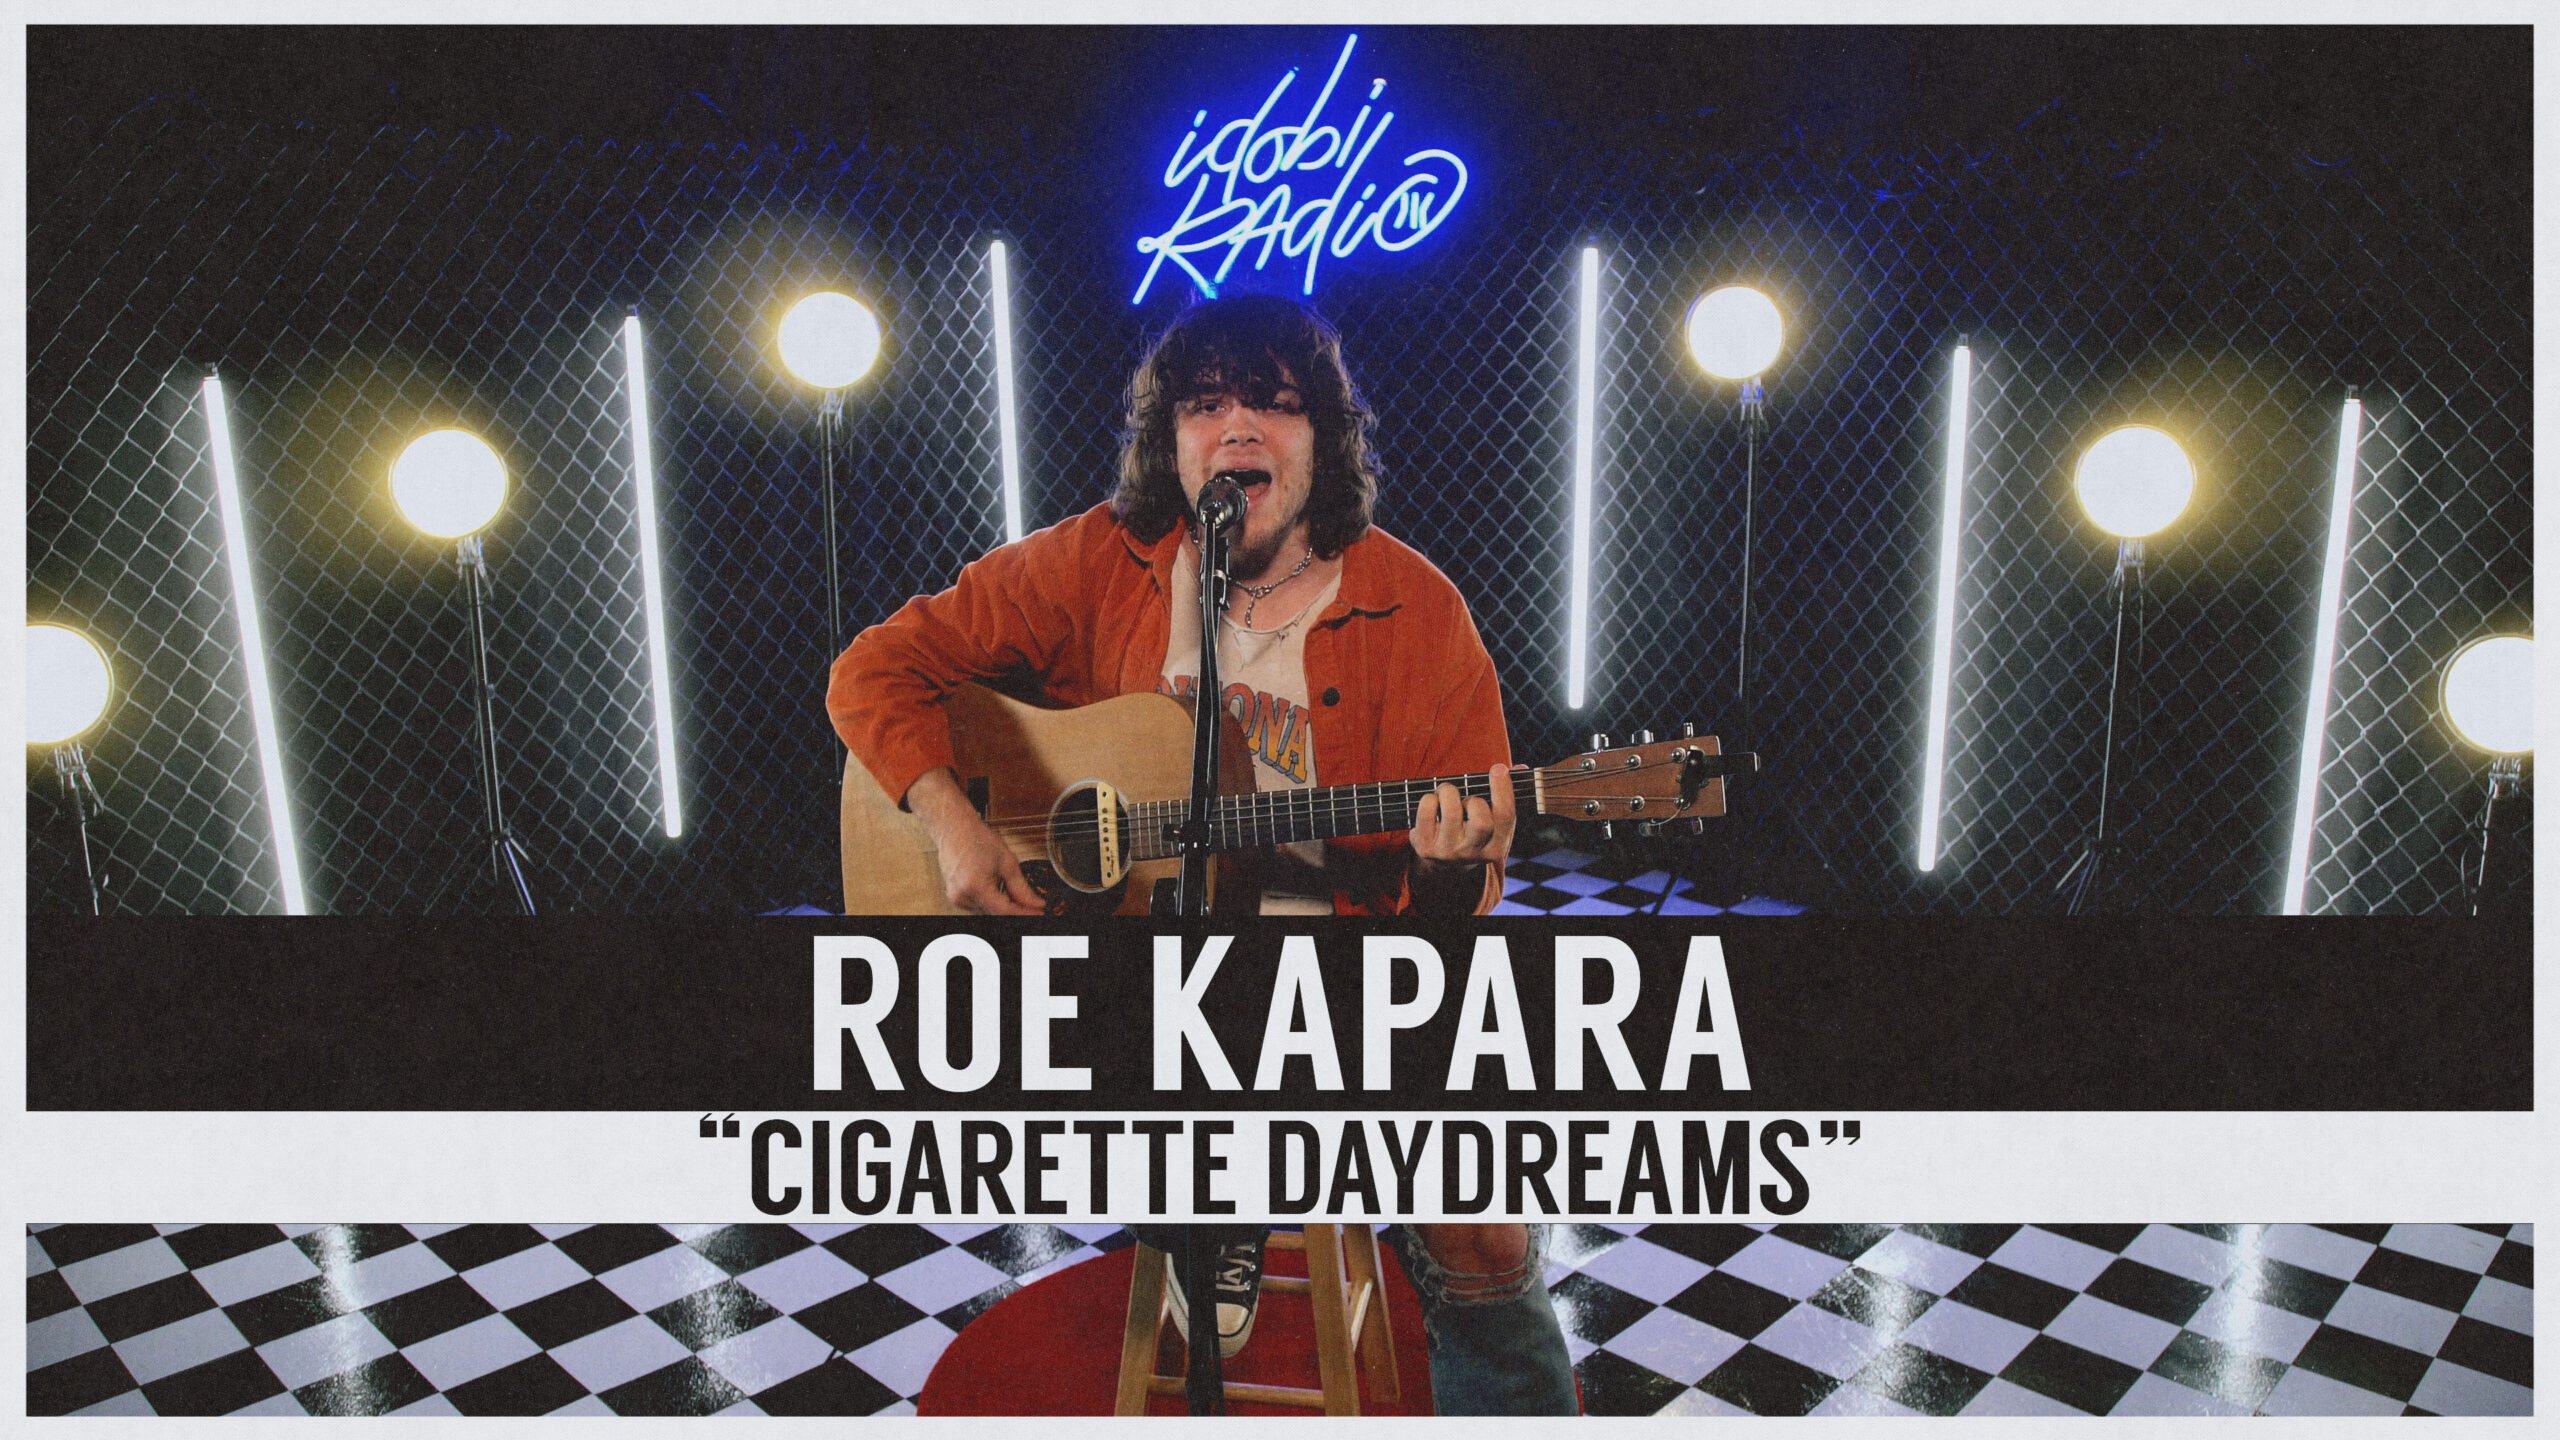 Roe Kapara Cigarette Daydreams